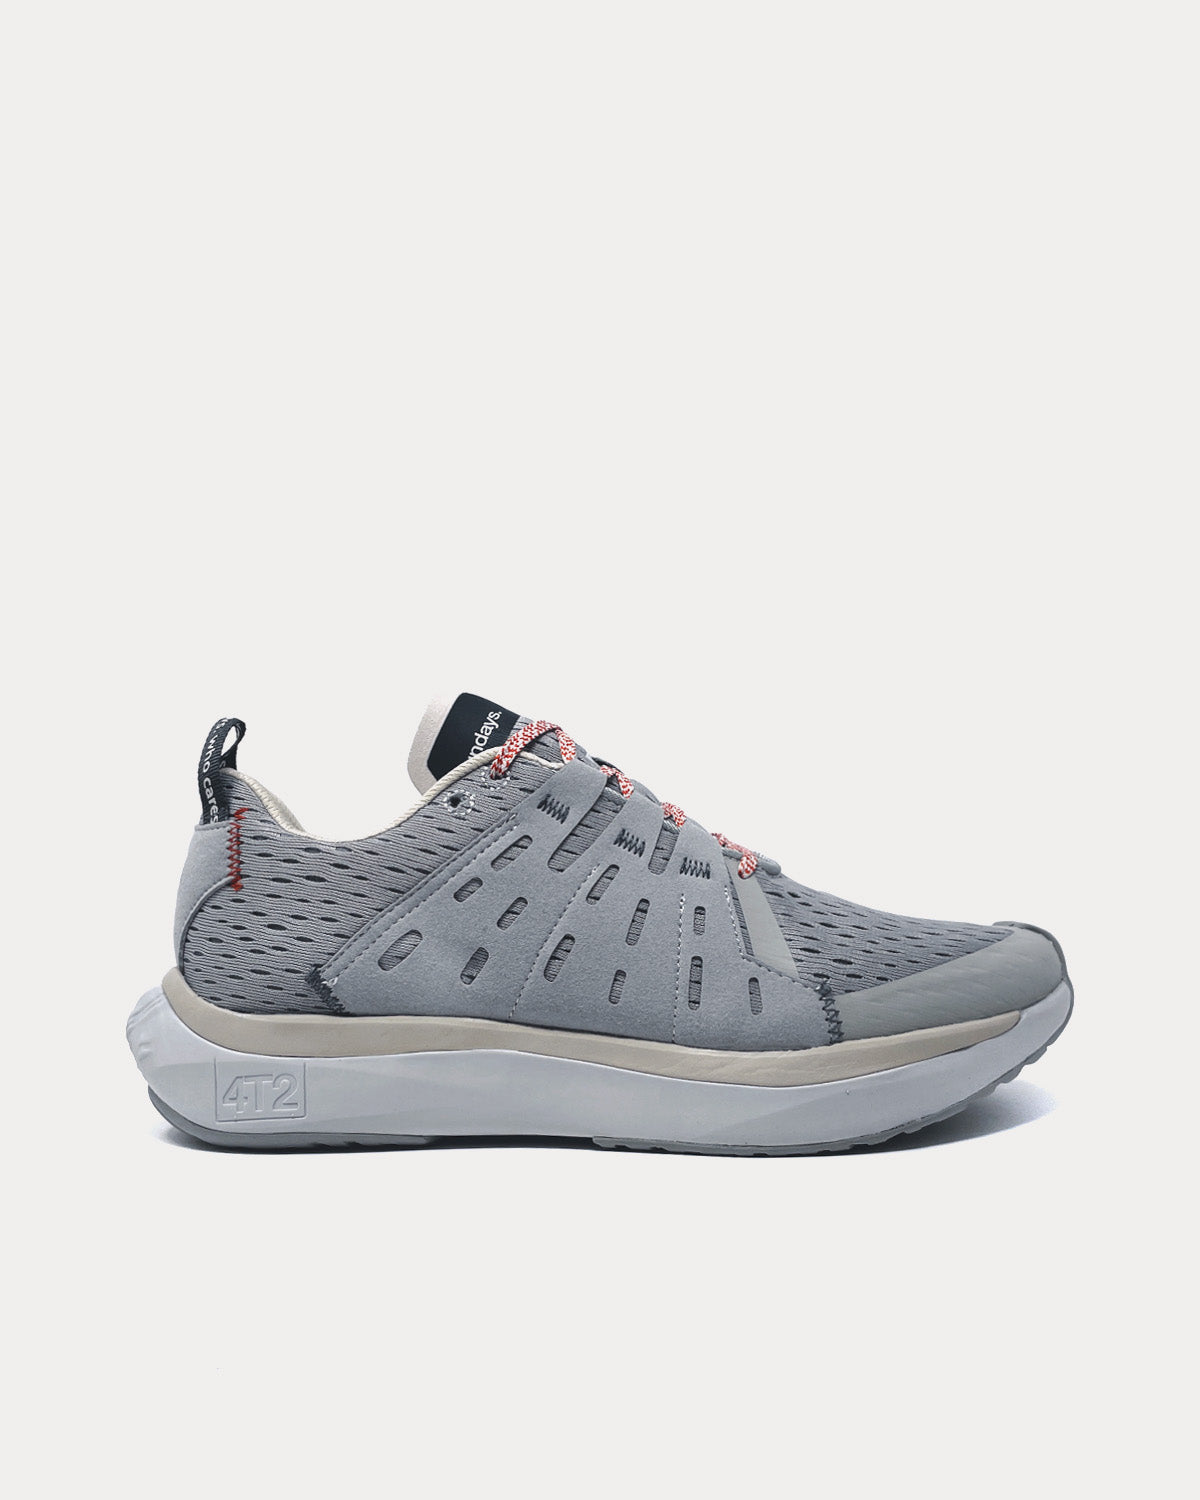 4T2 - Sundays Grey Running Shoes